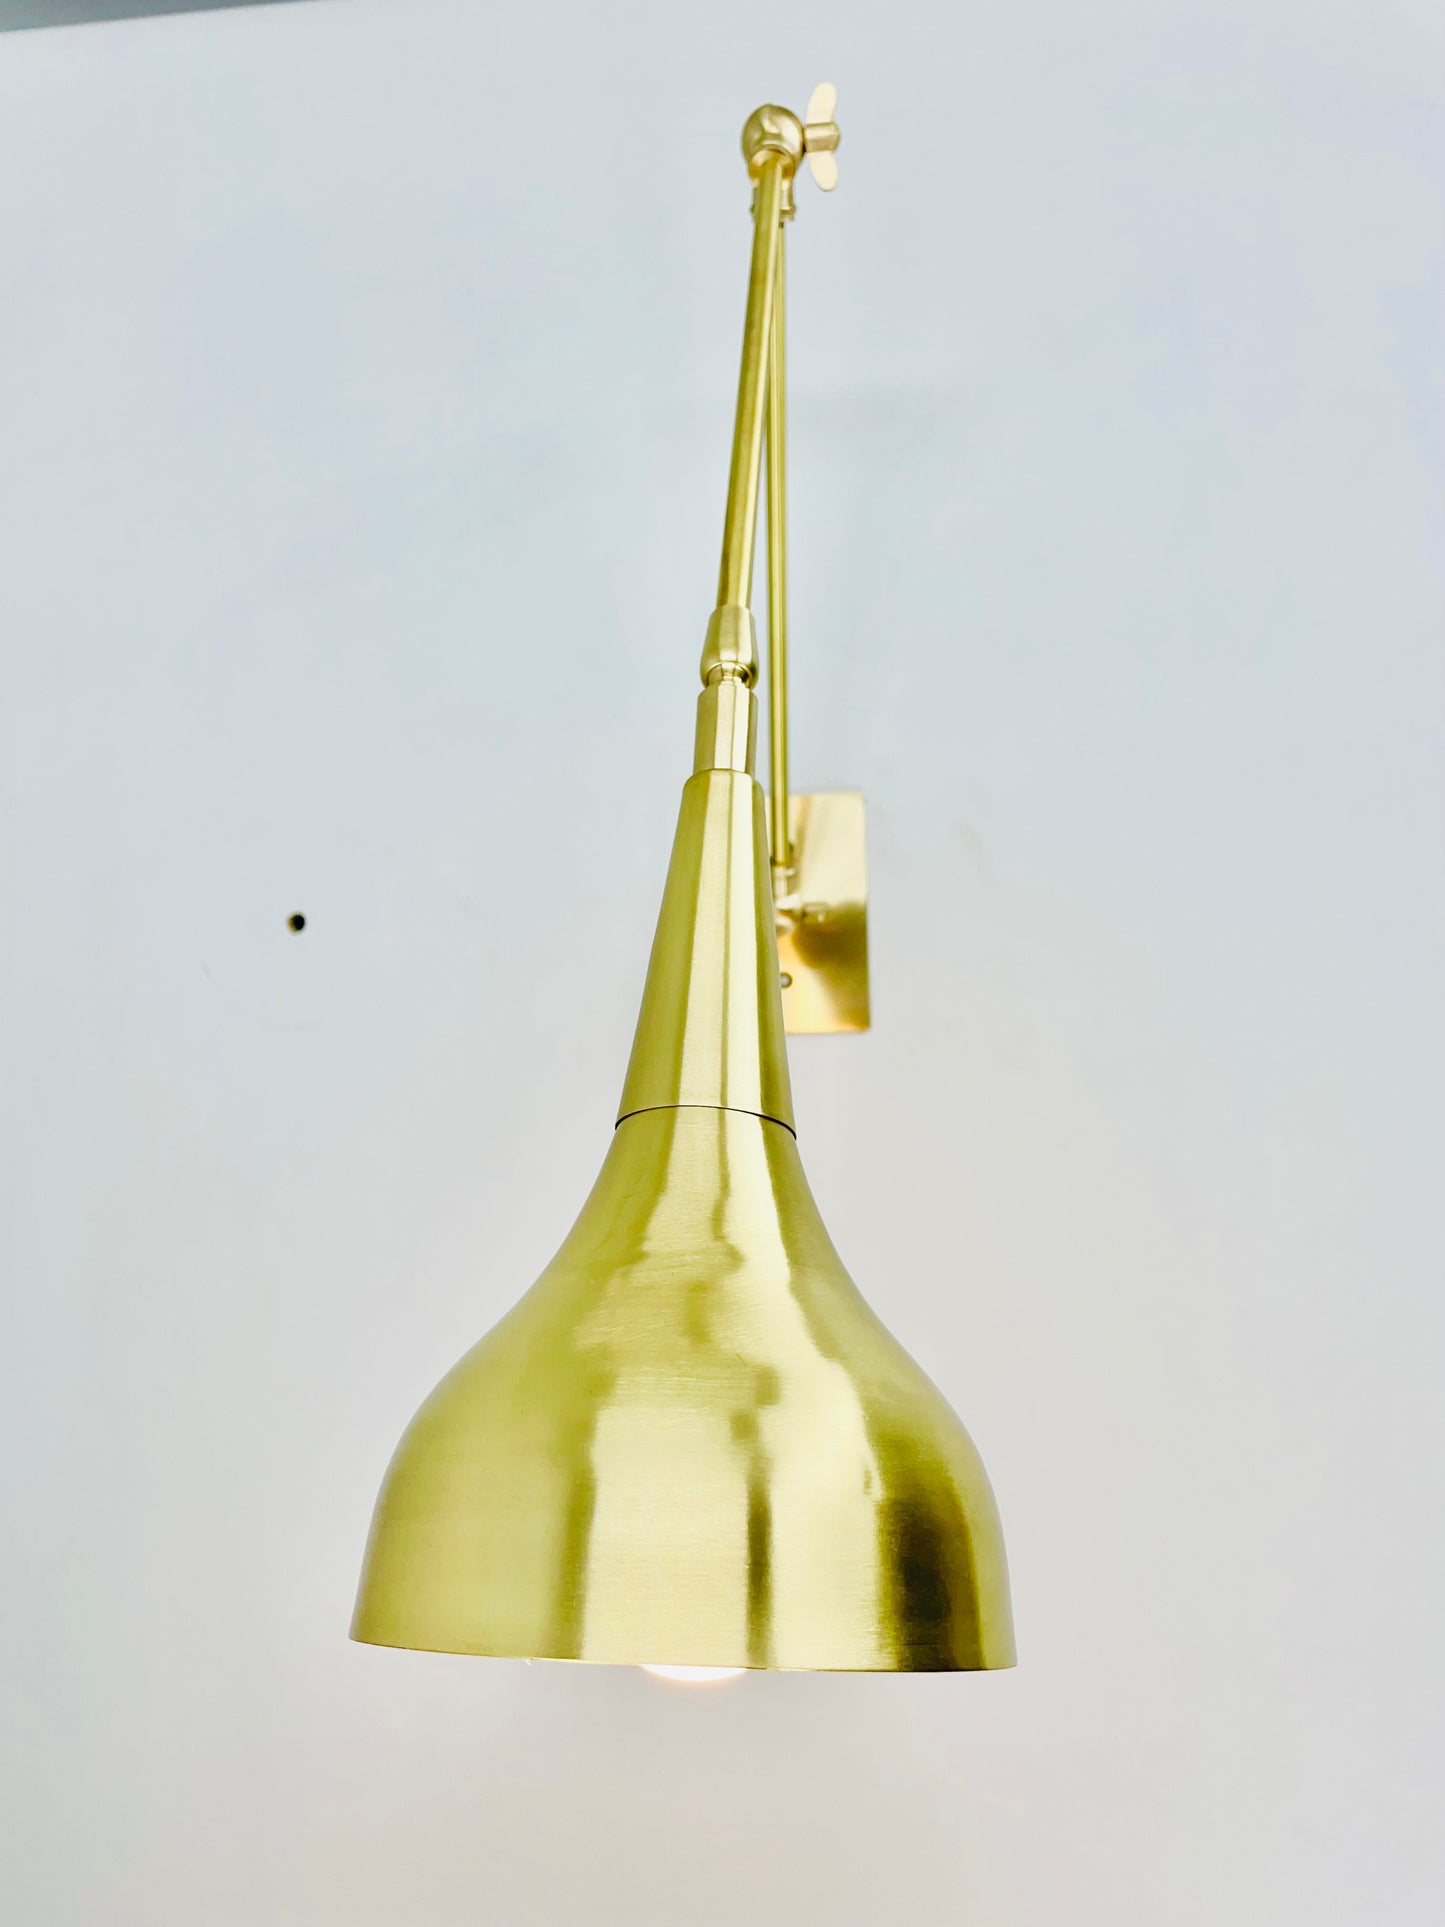 Raw Brass Wall Lamp , Handmade Vintage Inspired SCICCOSO Brass Wall Lamp , Handcrafted Wall Lamp Light GoldRaw Brass Wall Lamp , Handmade Vintage Inspired SCICCOSO Brass Wall Lamp , Handcrafted Wall Lamp Light Gold